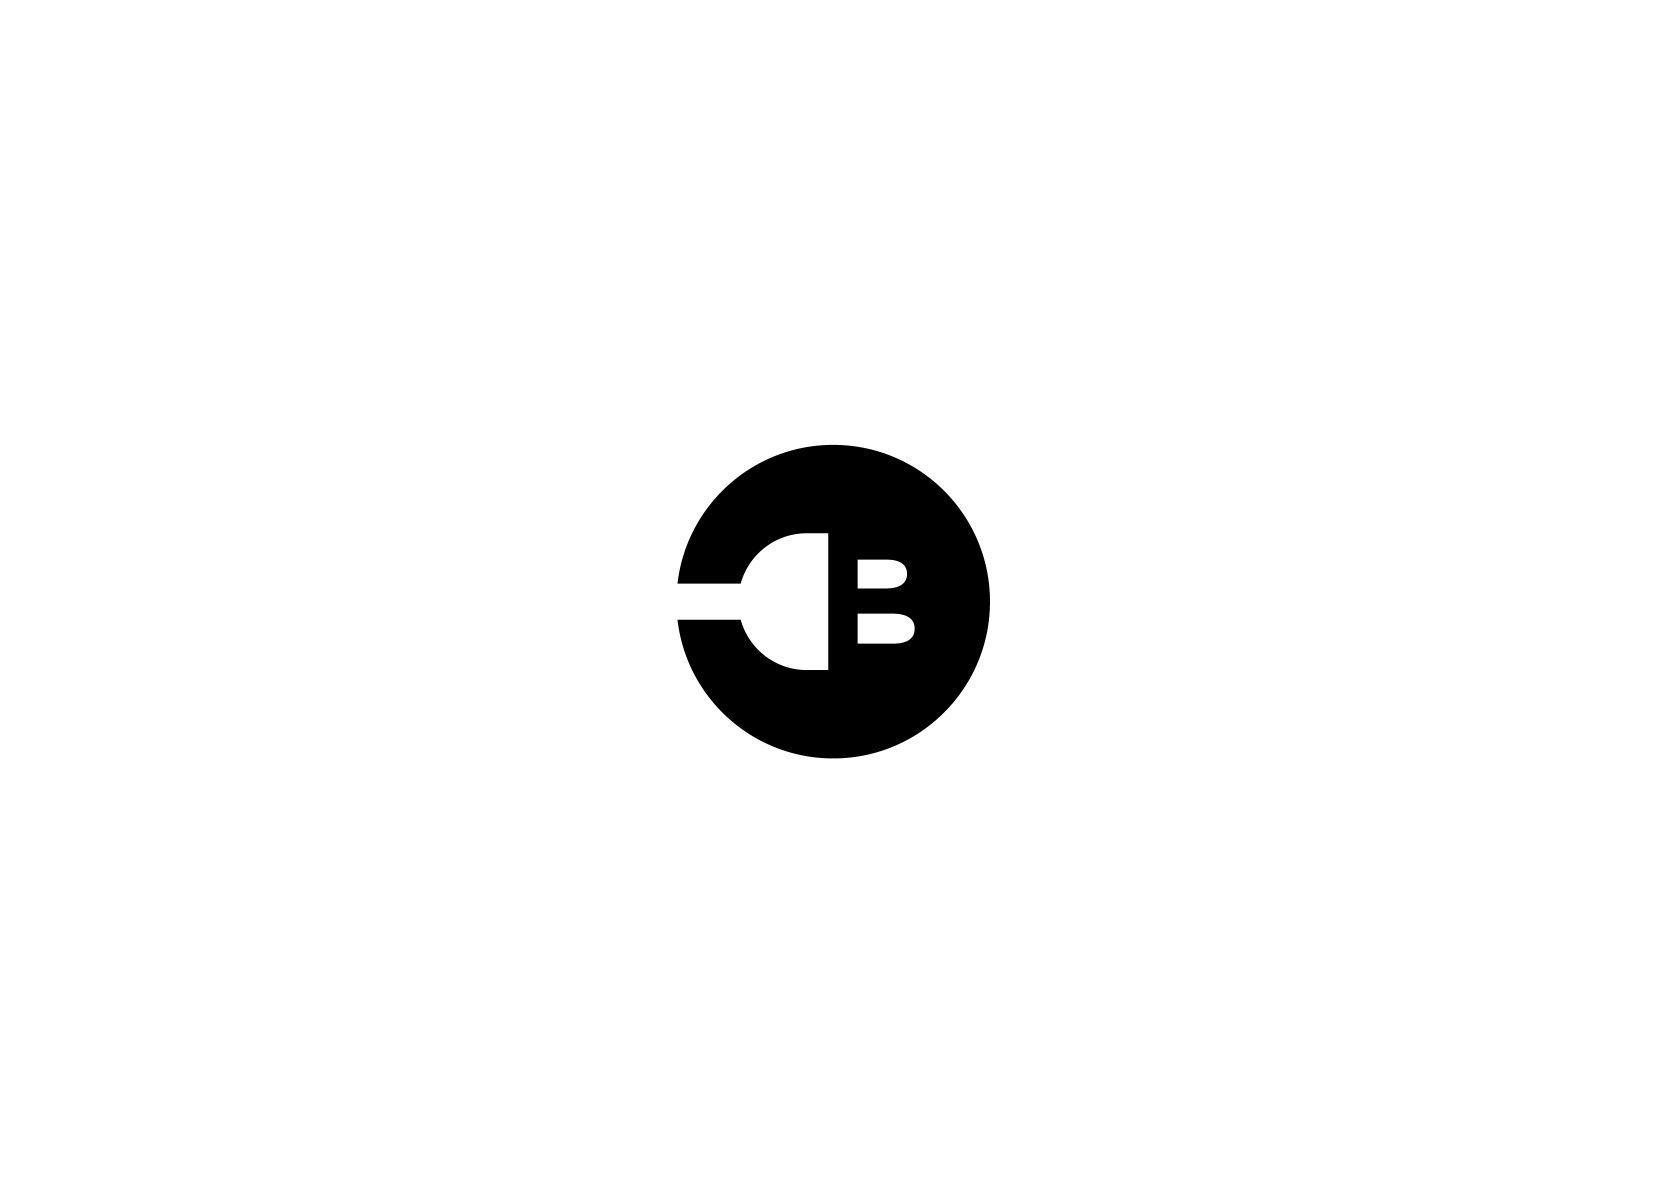 Plug Logo - B electric plug logo design Balsan Trading Company logo by Hadeel S ...